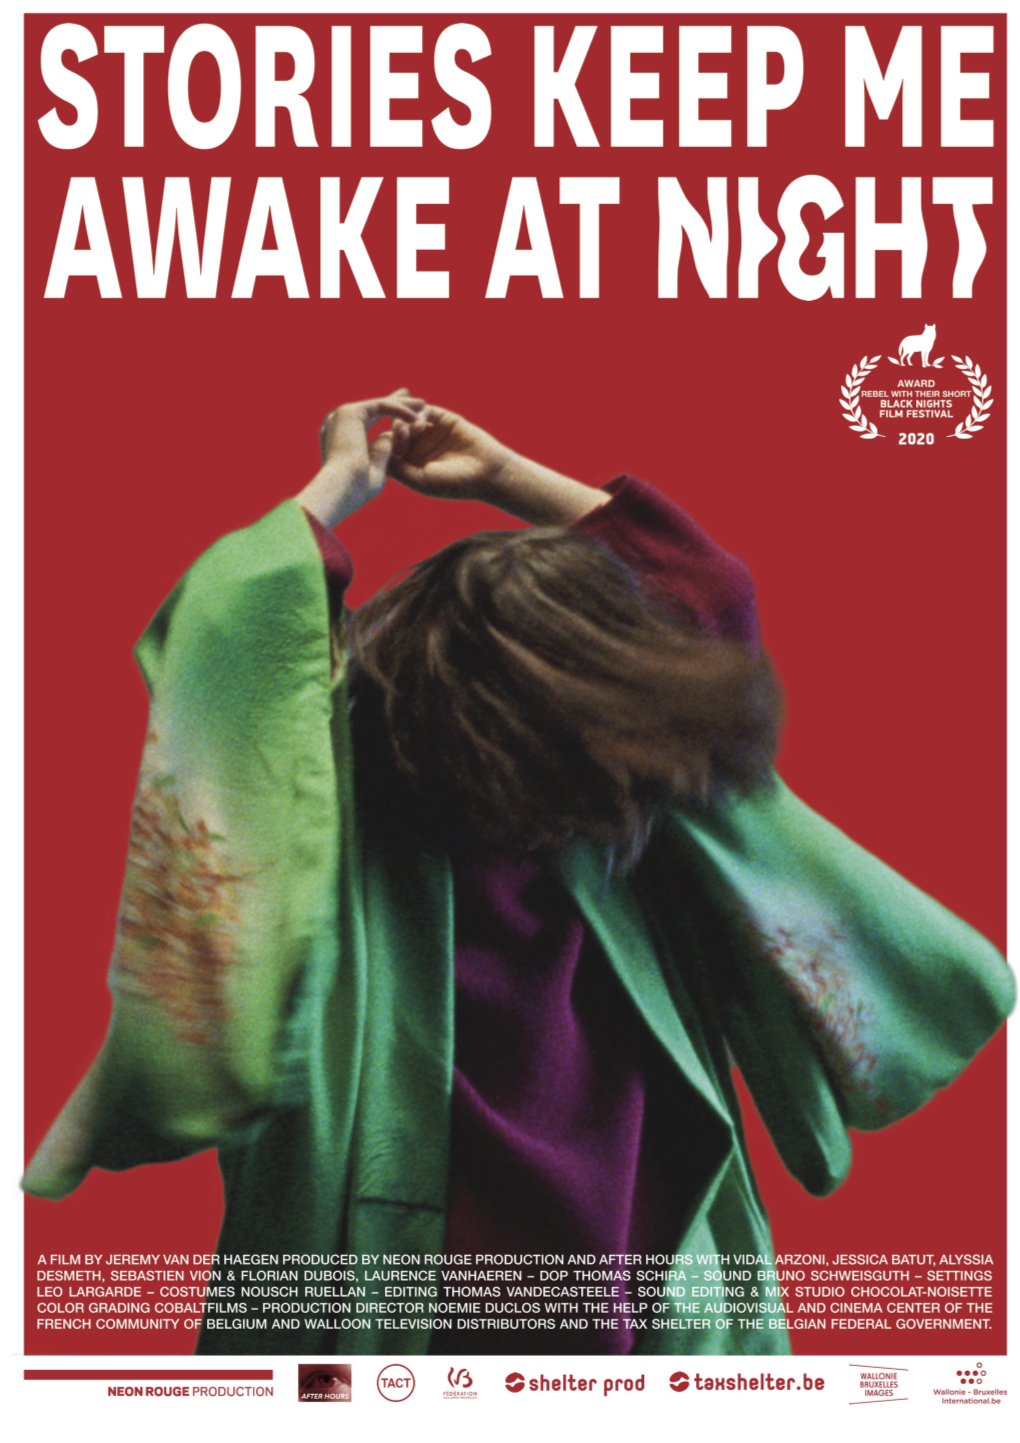 STORIES KEEP ME AWAKE at NIGHTEEP ME AWAKE at NIGHT Written and Directed by Jérémy Van Der Haegen